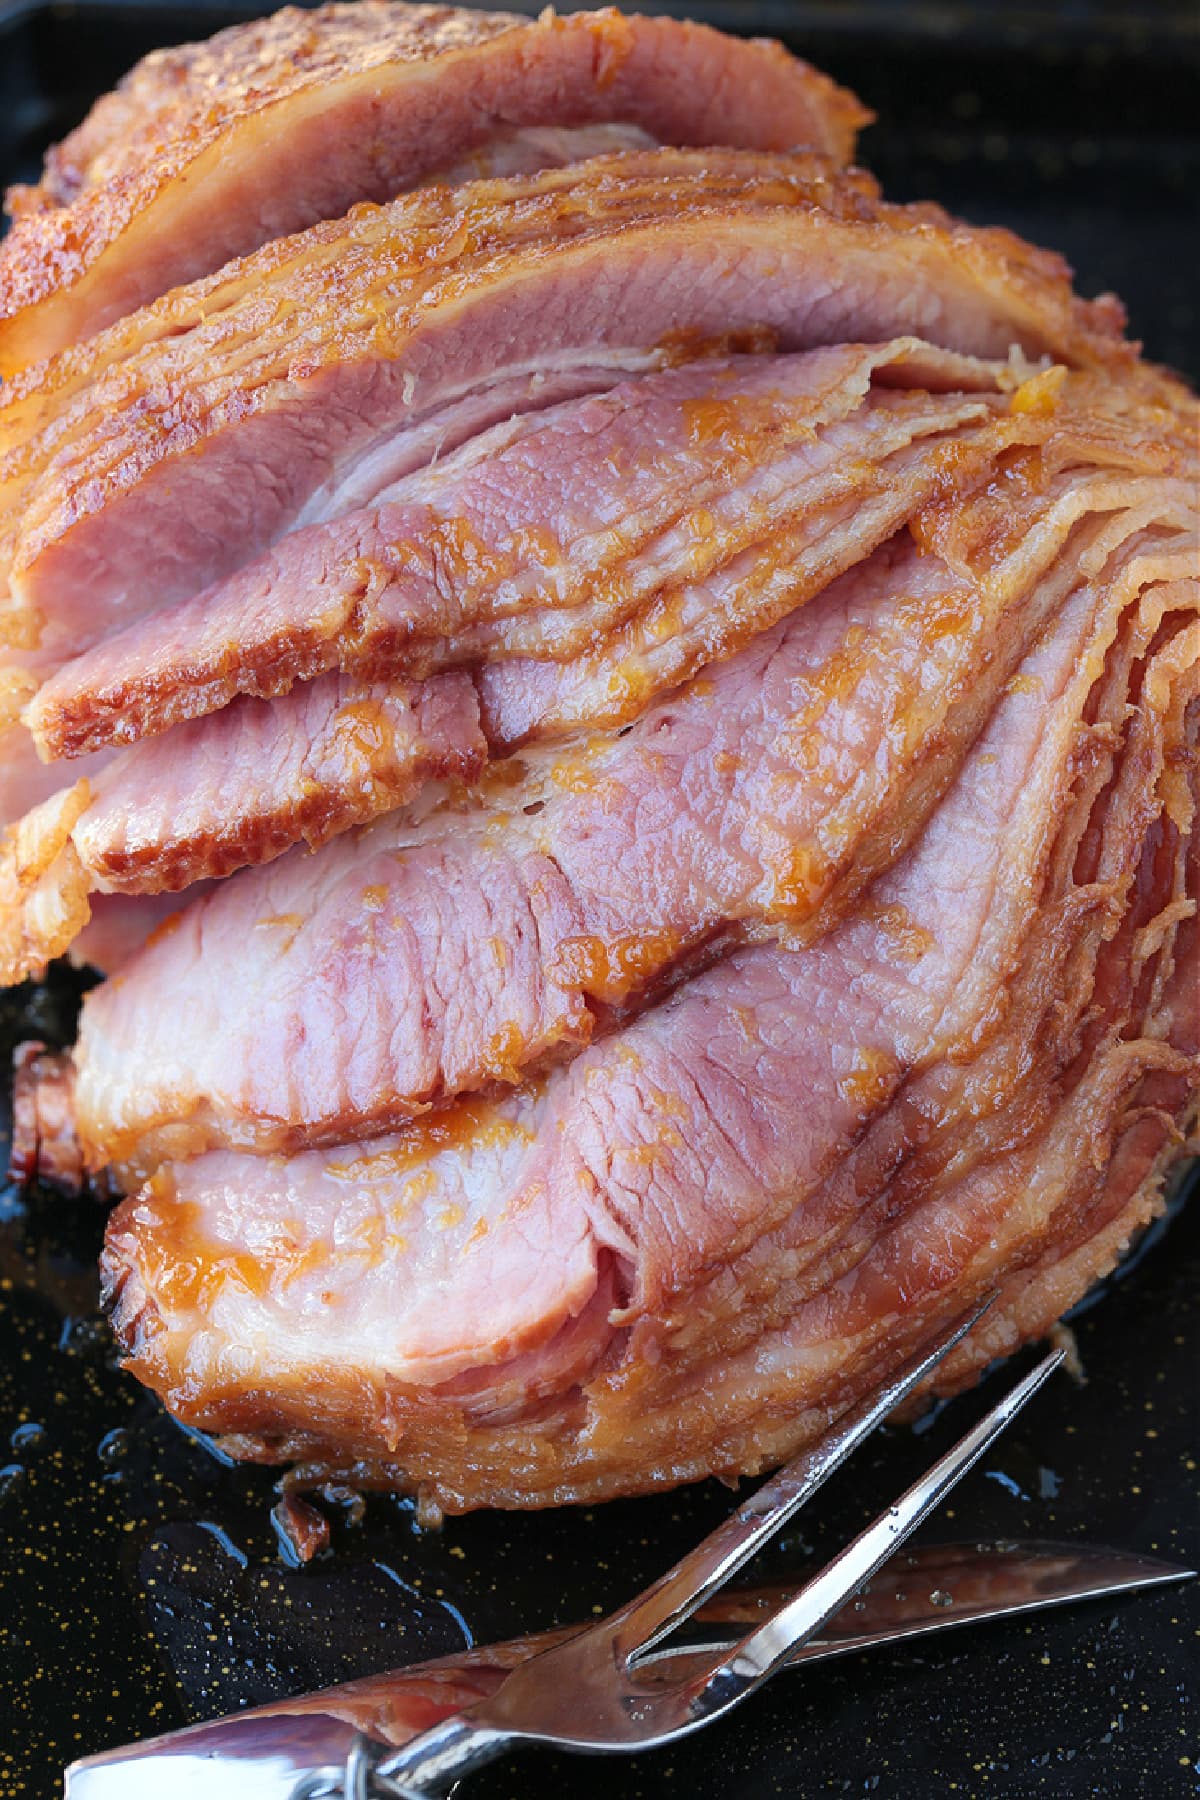 Sliced ham with glaze and a serving fork